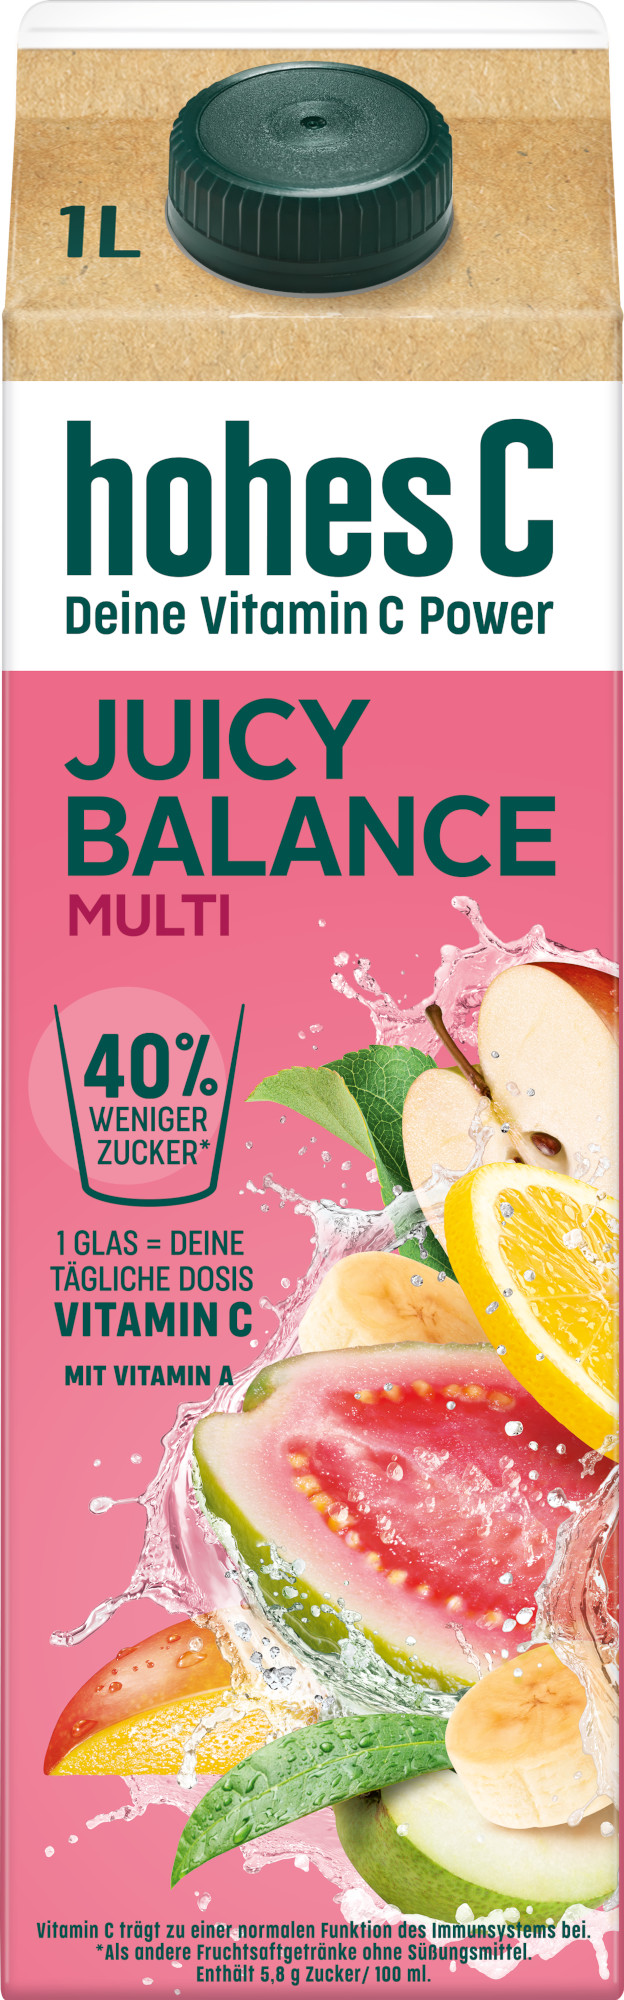 Hohes C Juicy Balance Roter Multivitamin